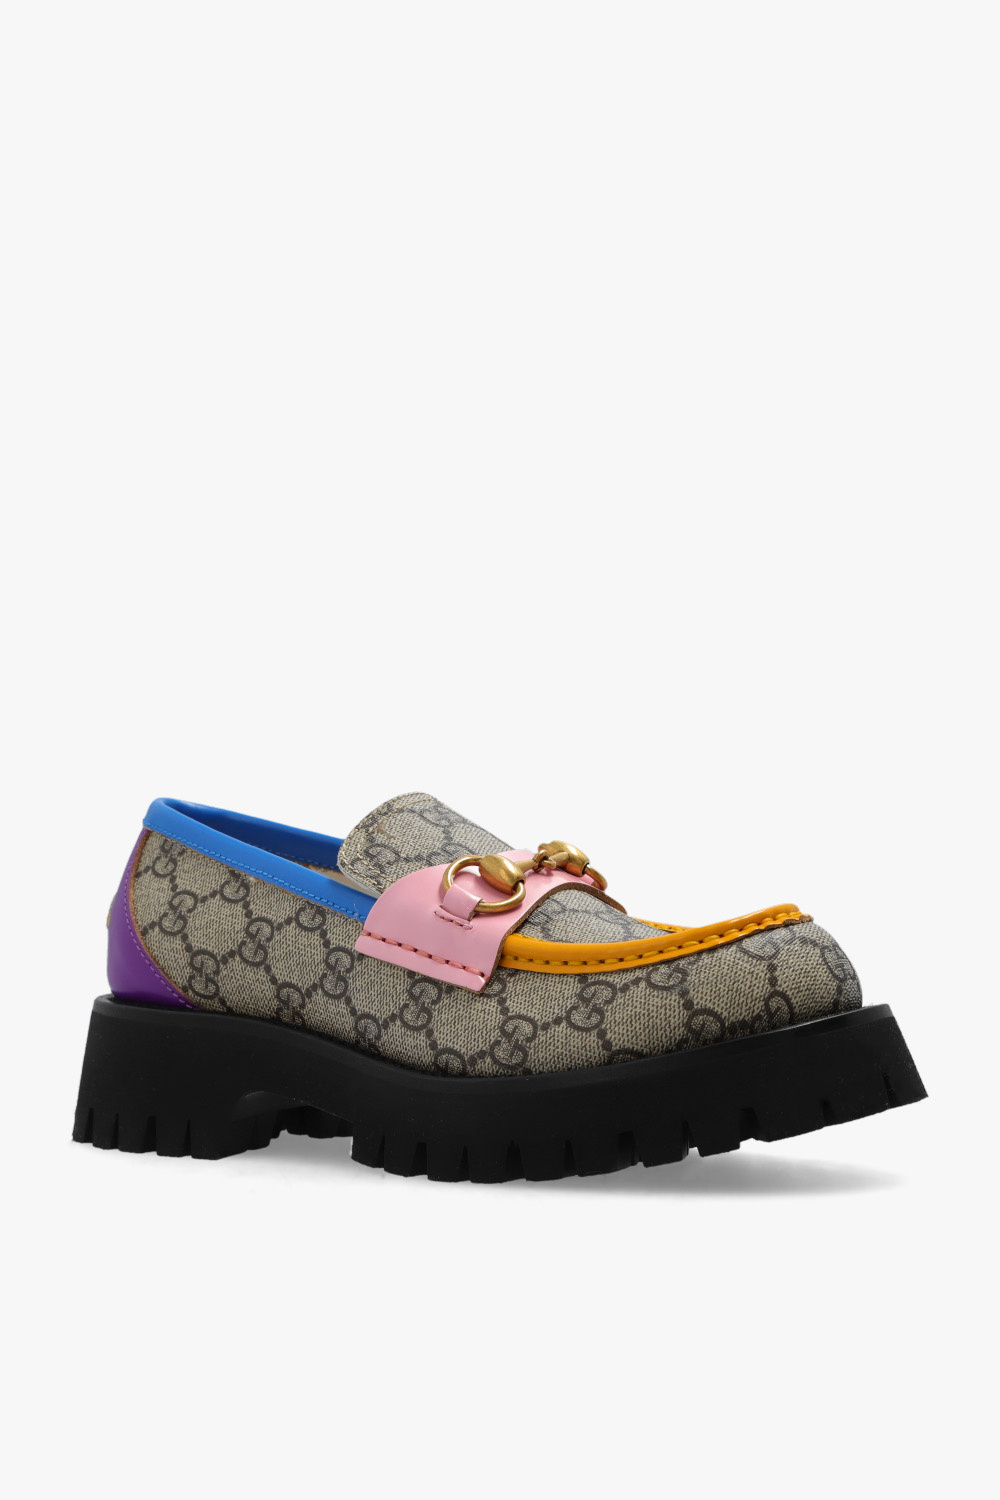 Gucci Horsebit loafers